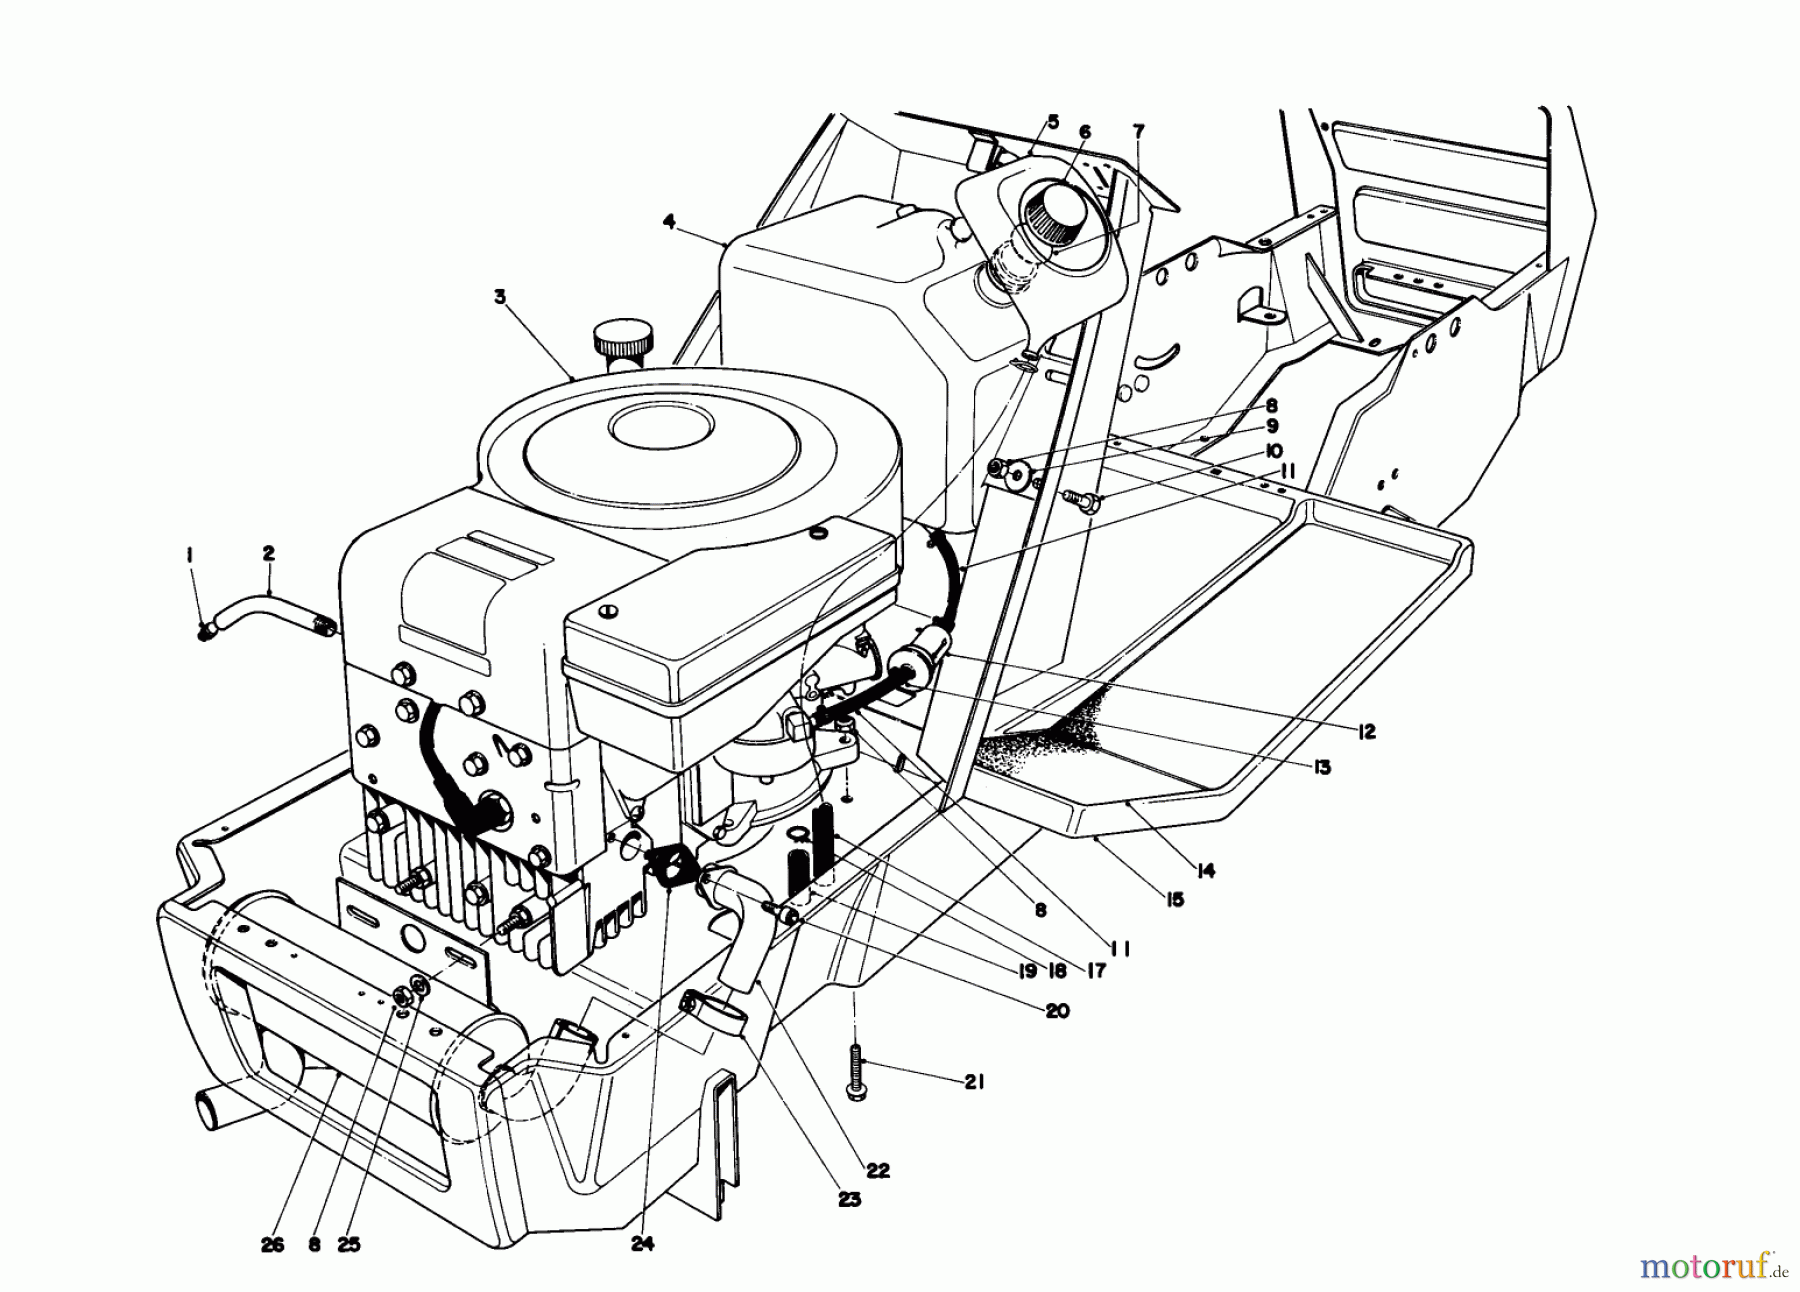  Toro Neu Mowers, Lawn & Garden Tractor Seite 1 57300 (8-32) - Toro 8-32 Front Engine Rider, 1980 (0000001-0999999) ENGINE ASSEMBLY MODEL 57300